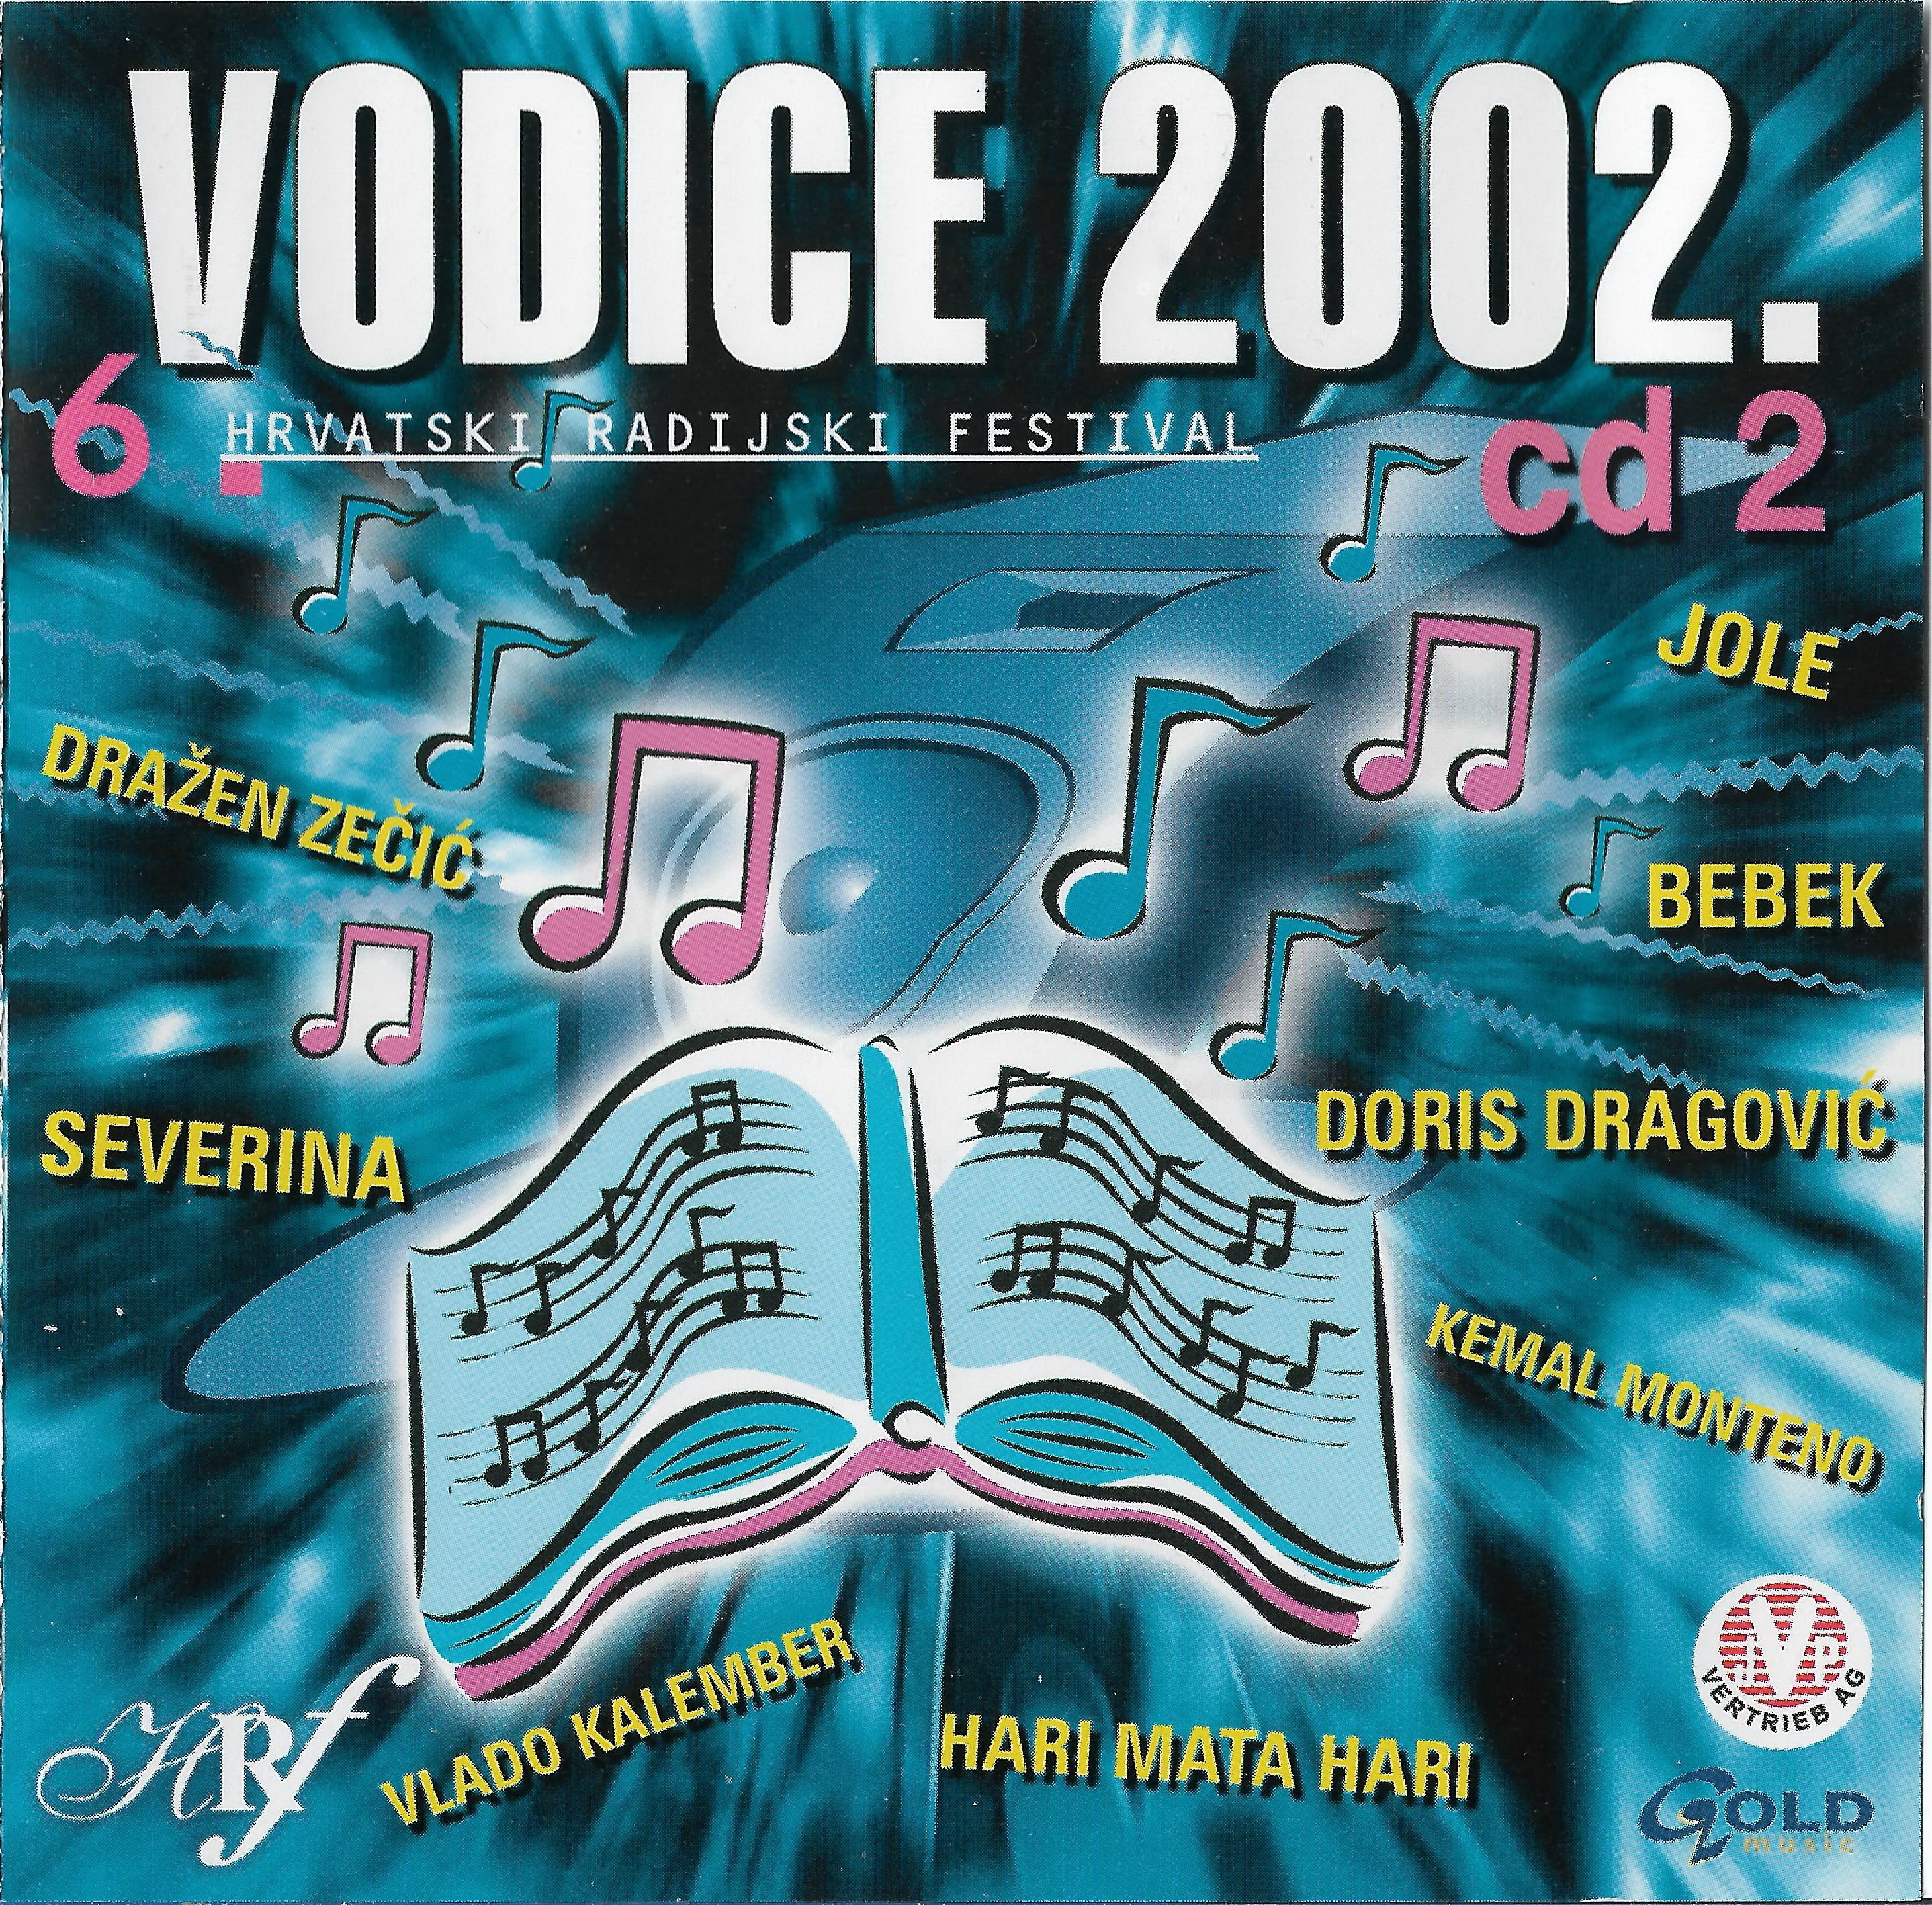 Vodice 2002 CD 2 1 a